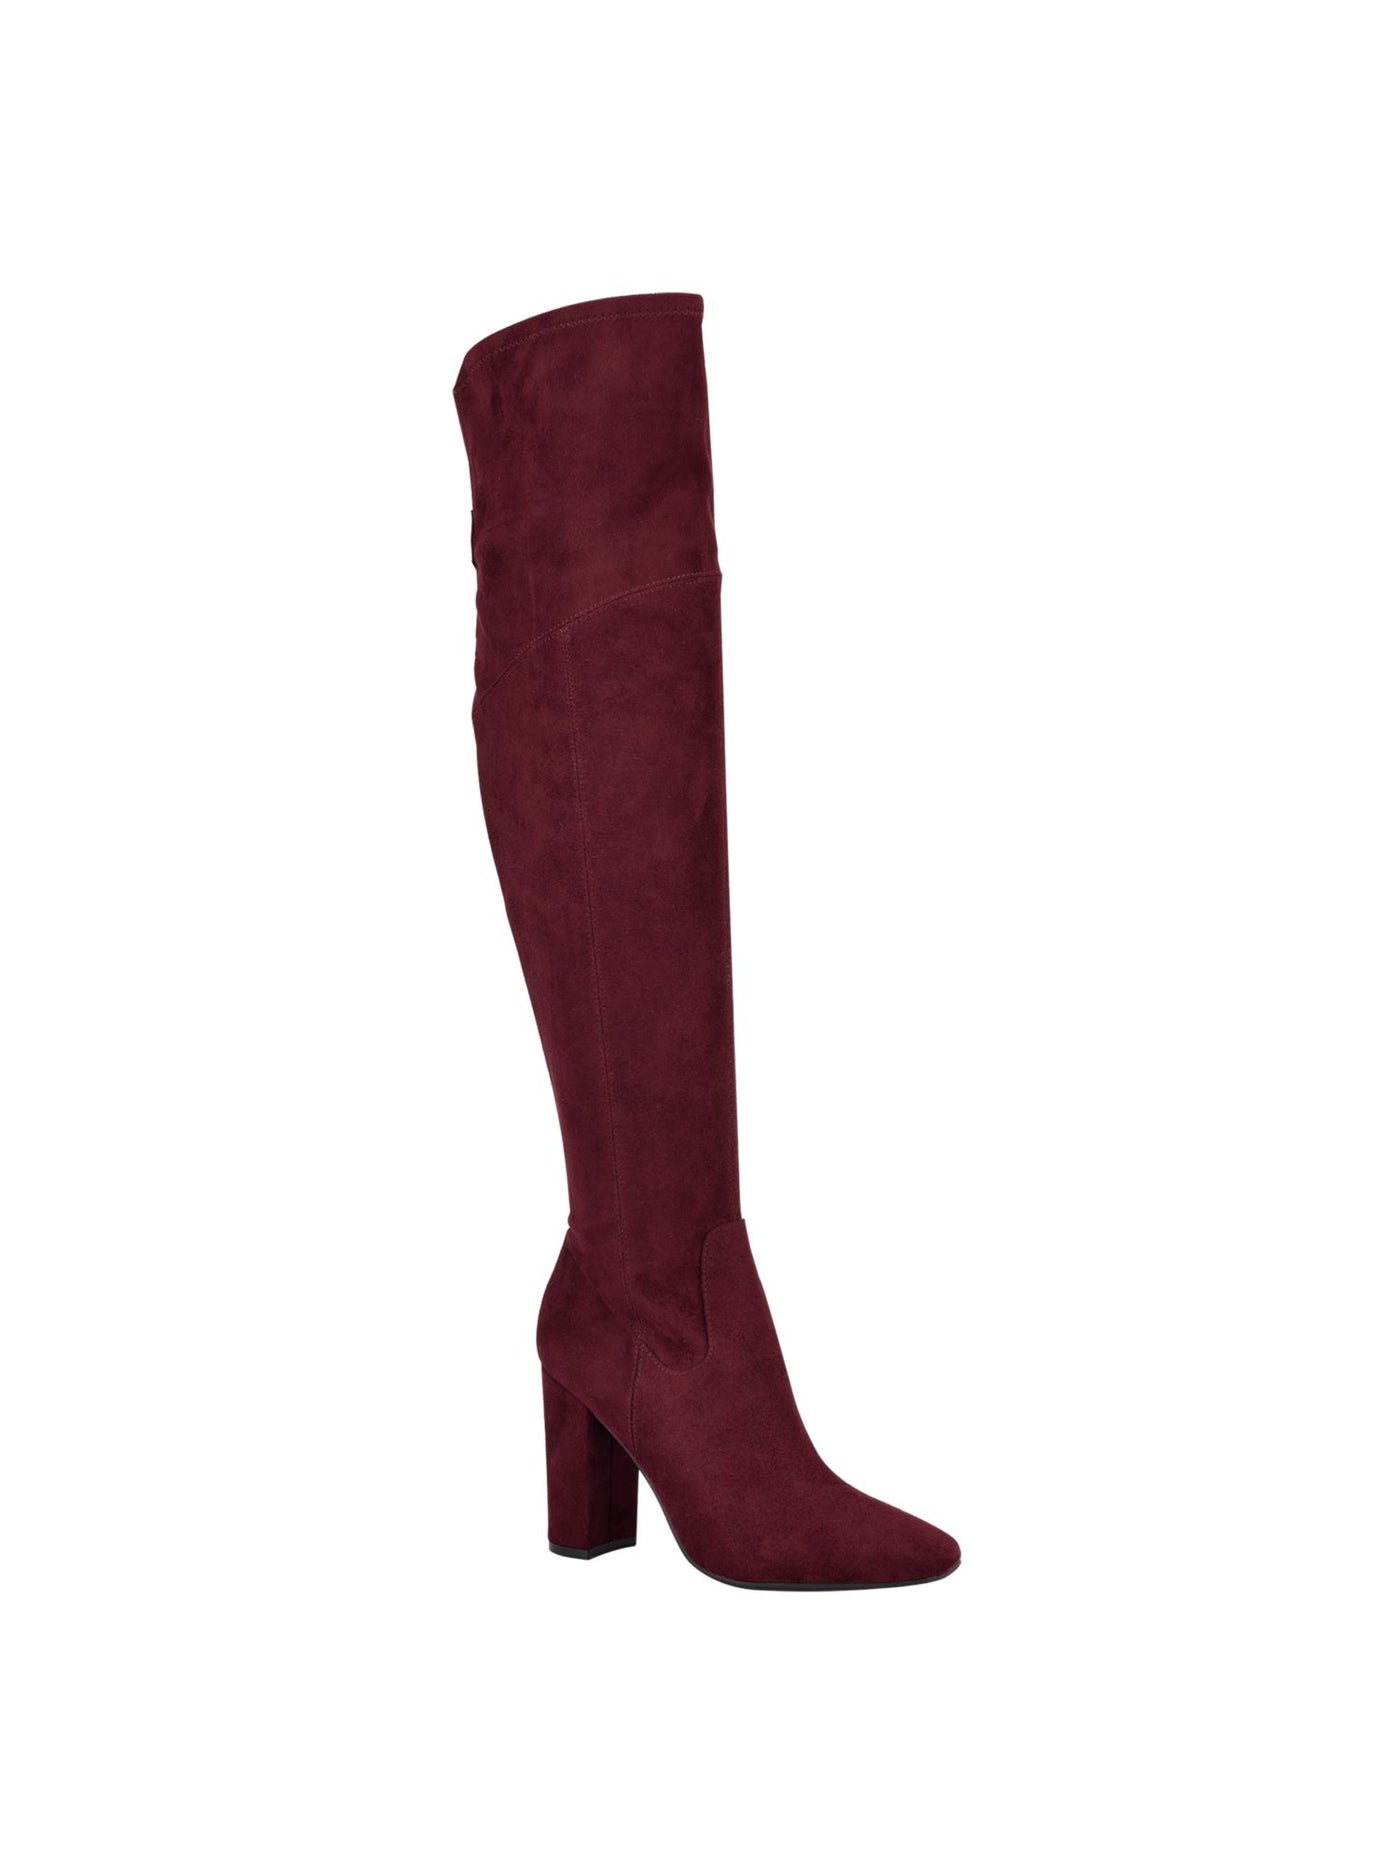 GUESS Womens Burgundy Gore Stretch Logo Mireya Square Toe Block Heel Zip-Up Dress Boots 6.5 M